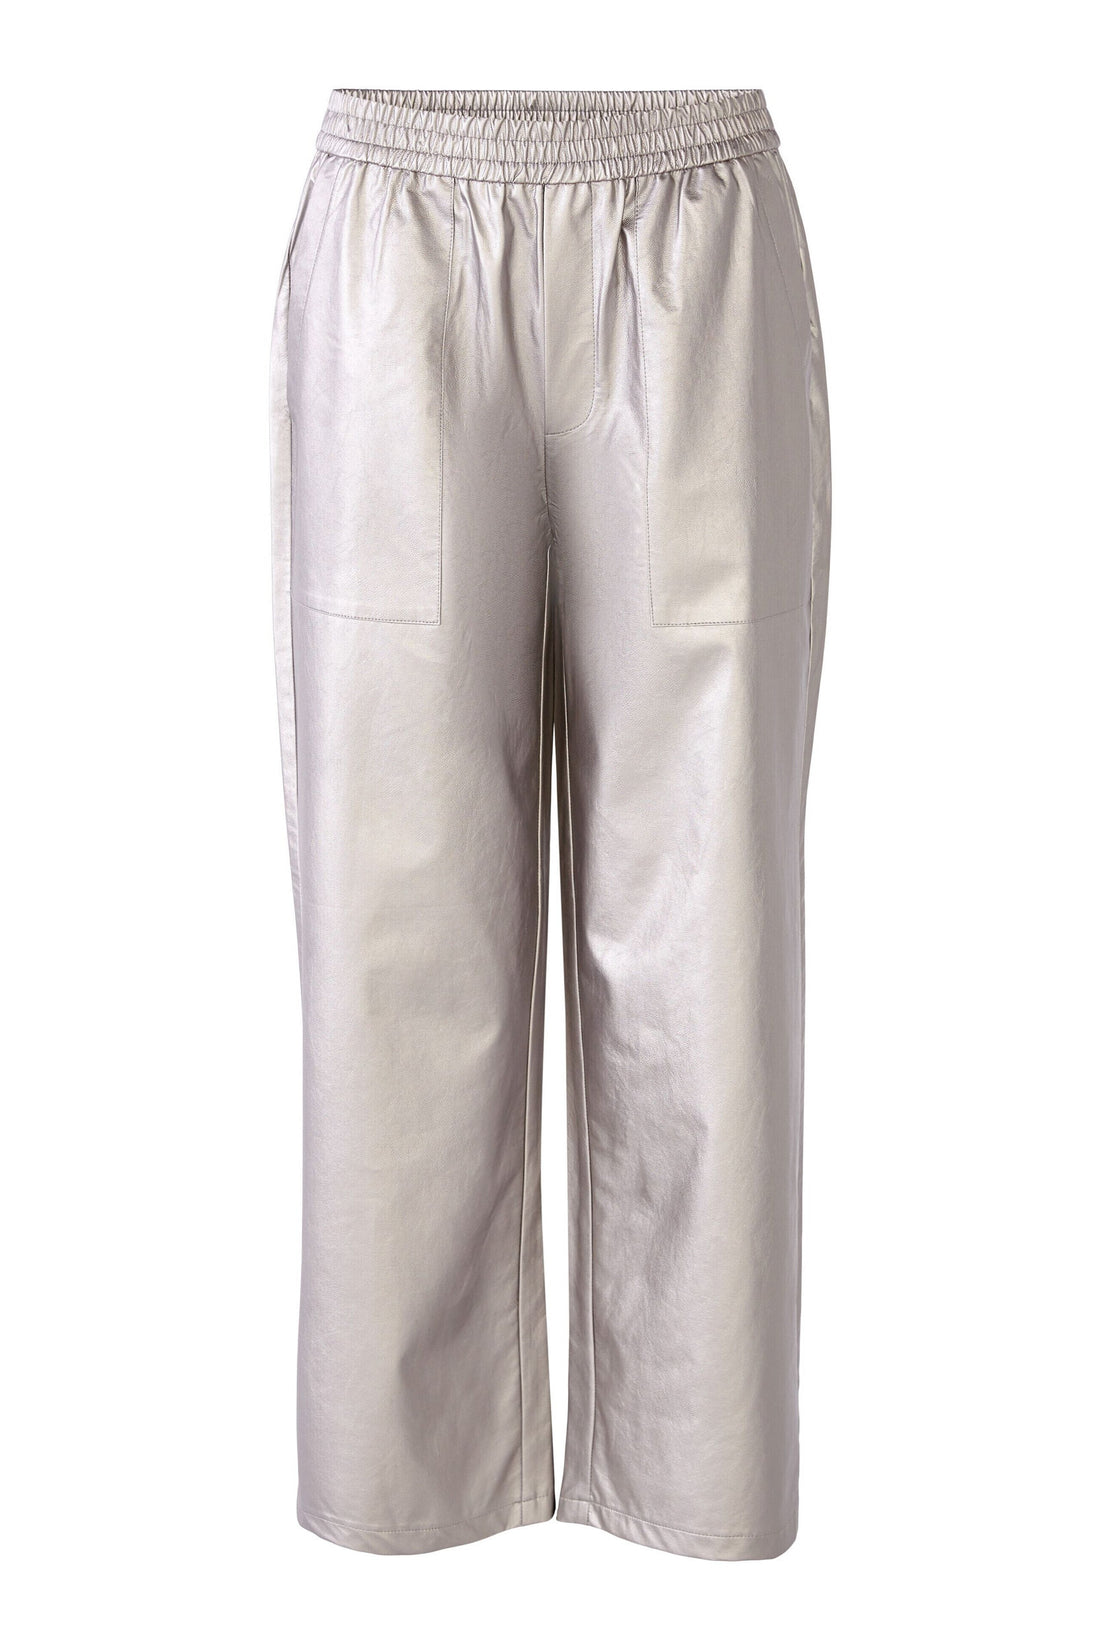 Silver Metallic Slip On Trousers_80153_9600_01